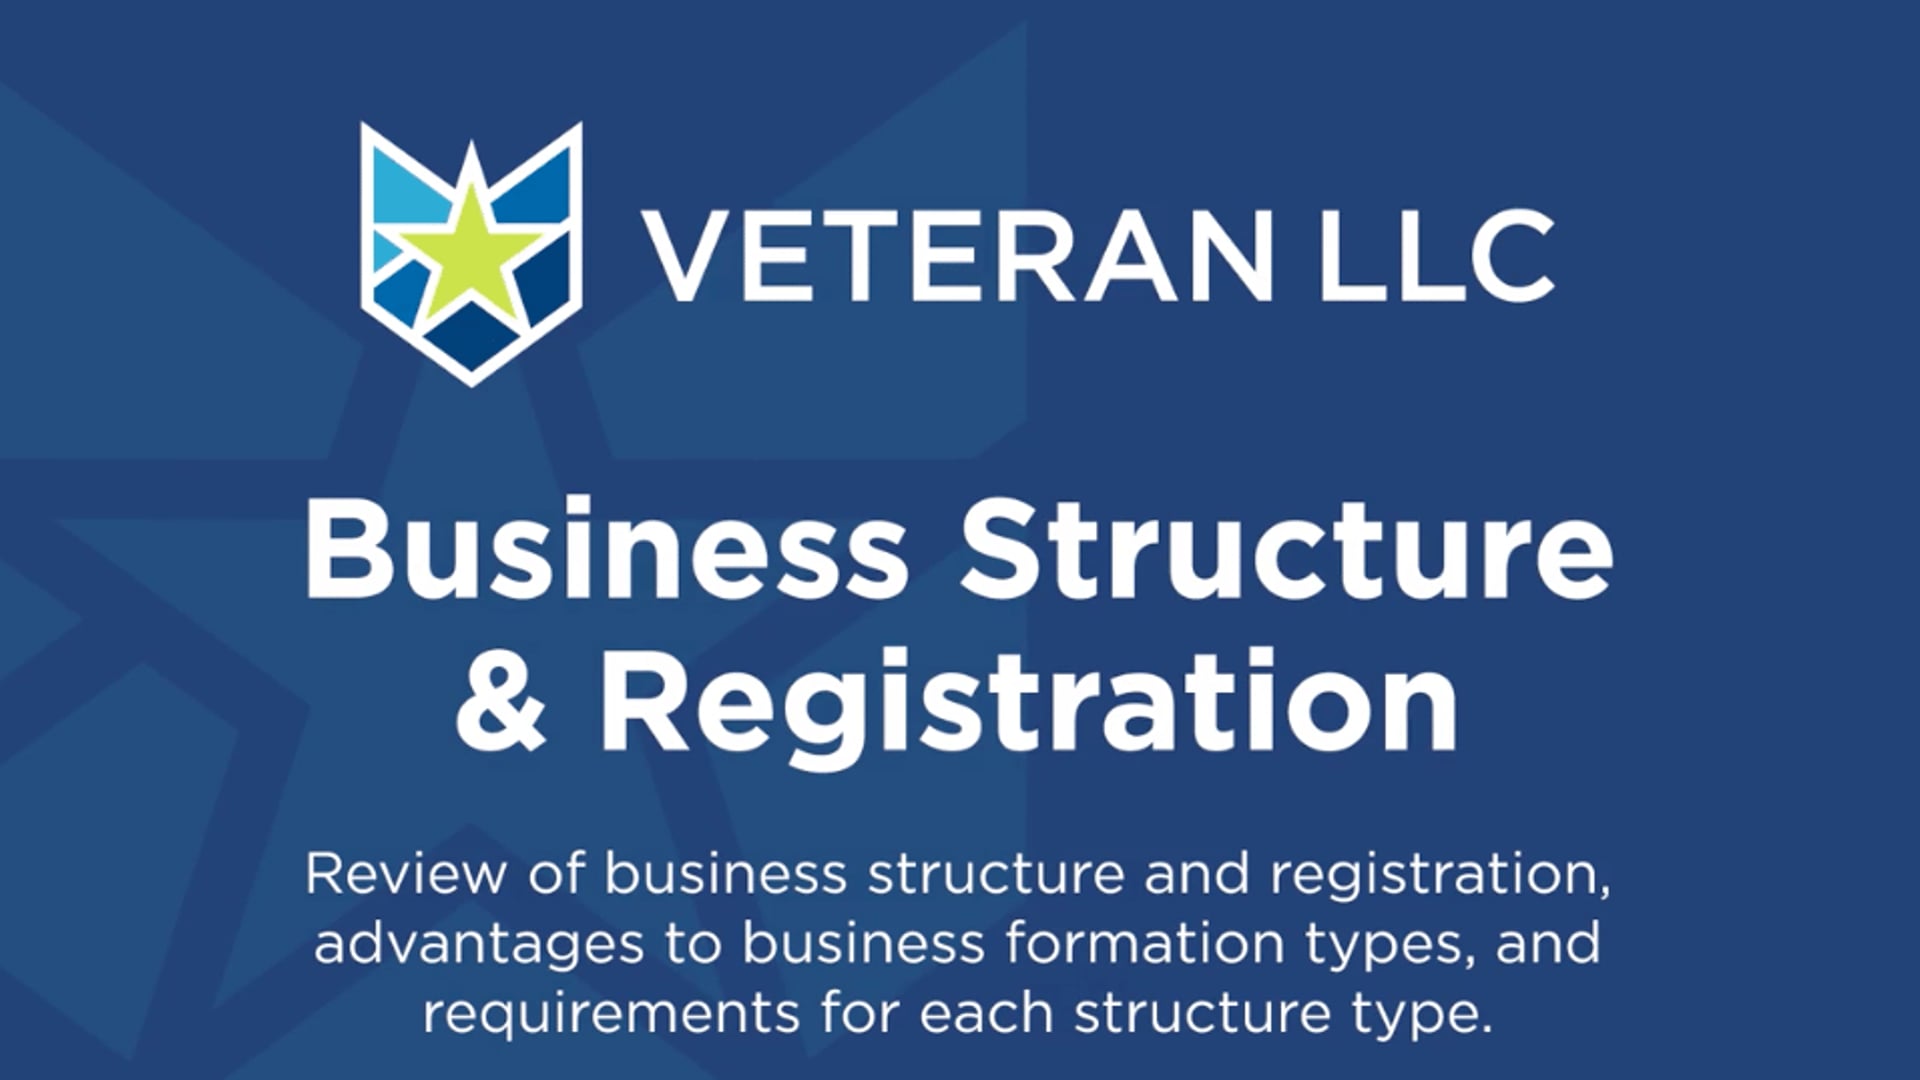 Veteran LLC - Business Structure & Registration